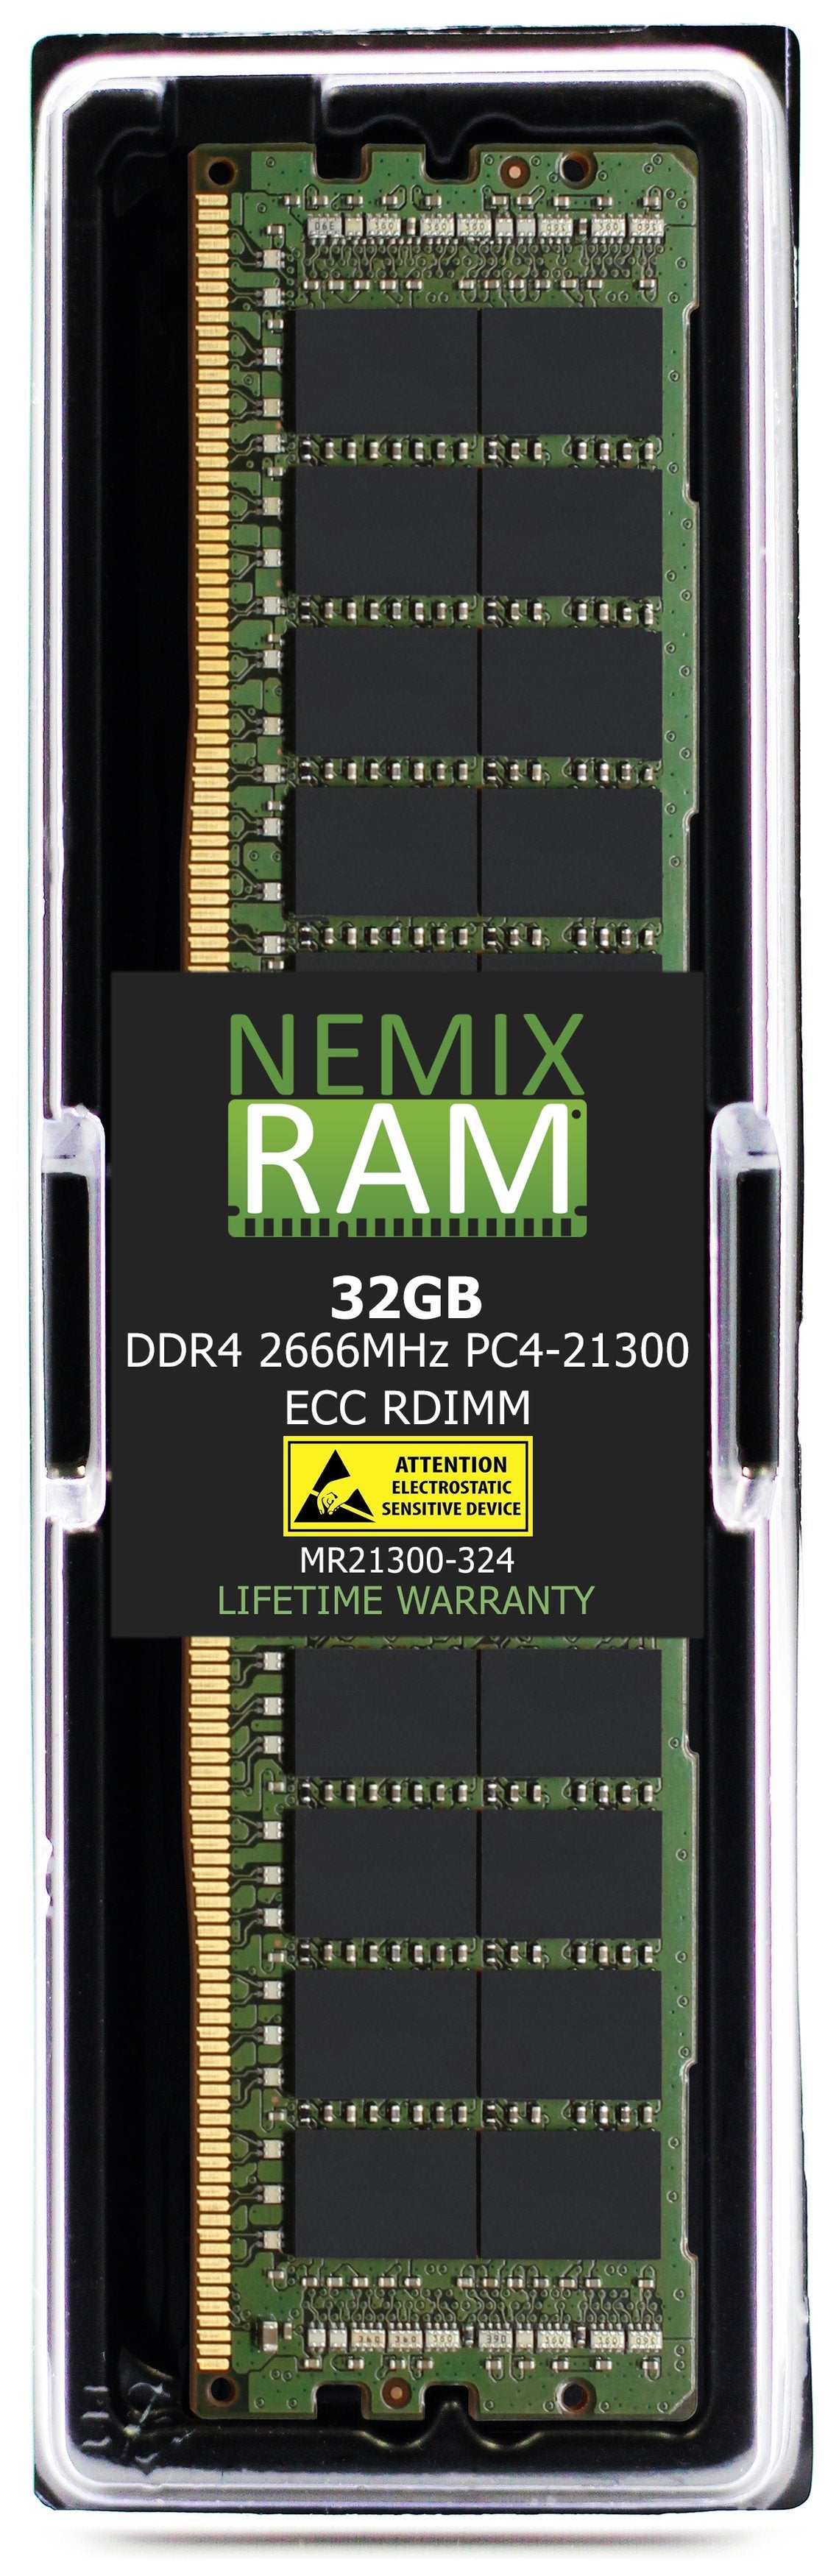 32GB DDR4 2666MHZ PC4-21300 RDIMM Compatible with Supermicro MEM-DR432L-CV01-ER29